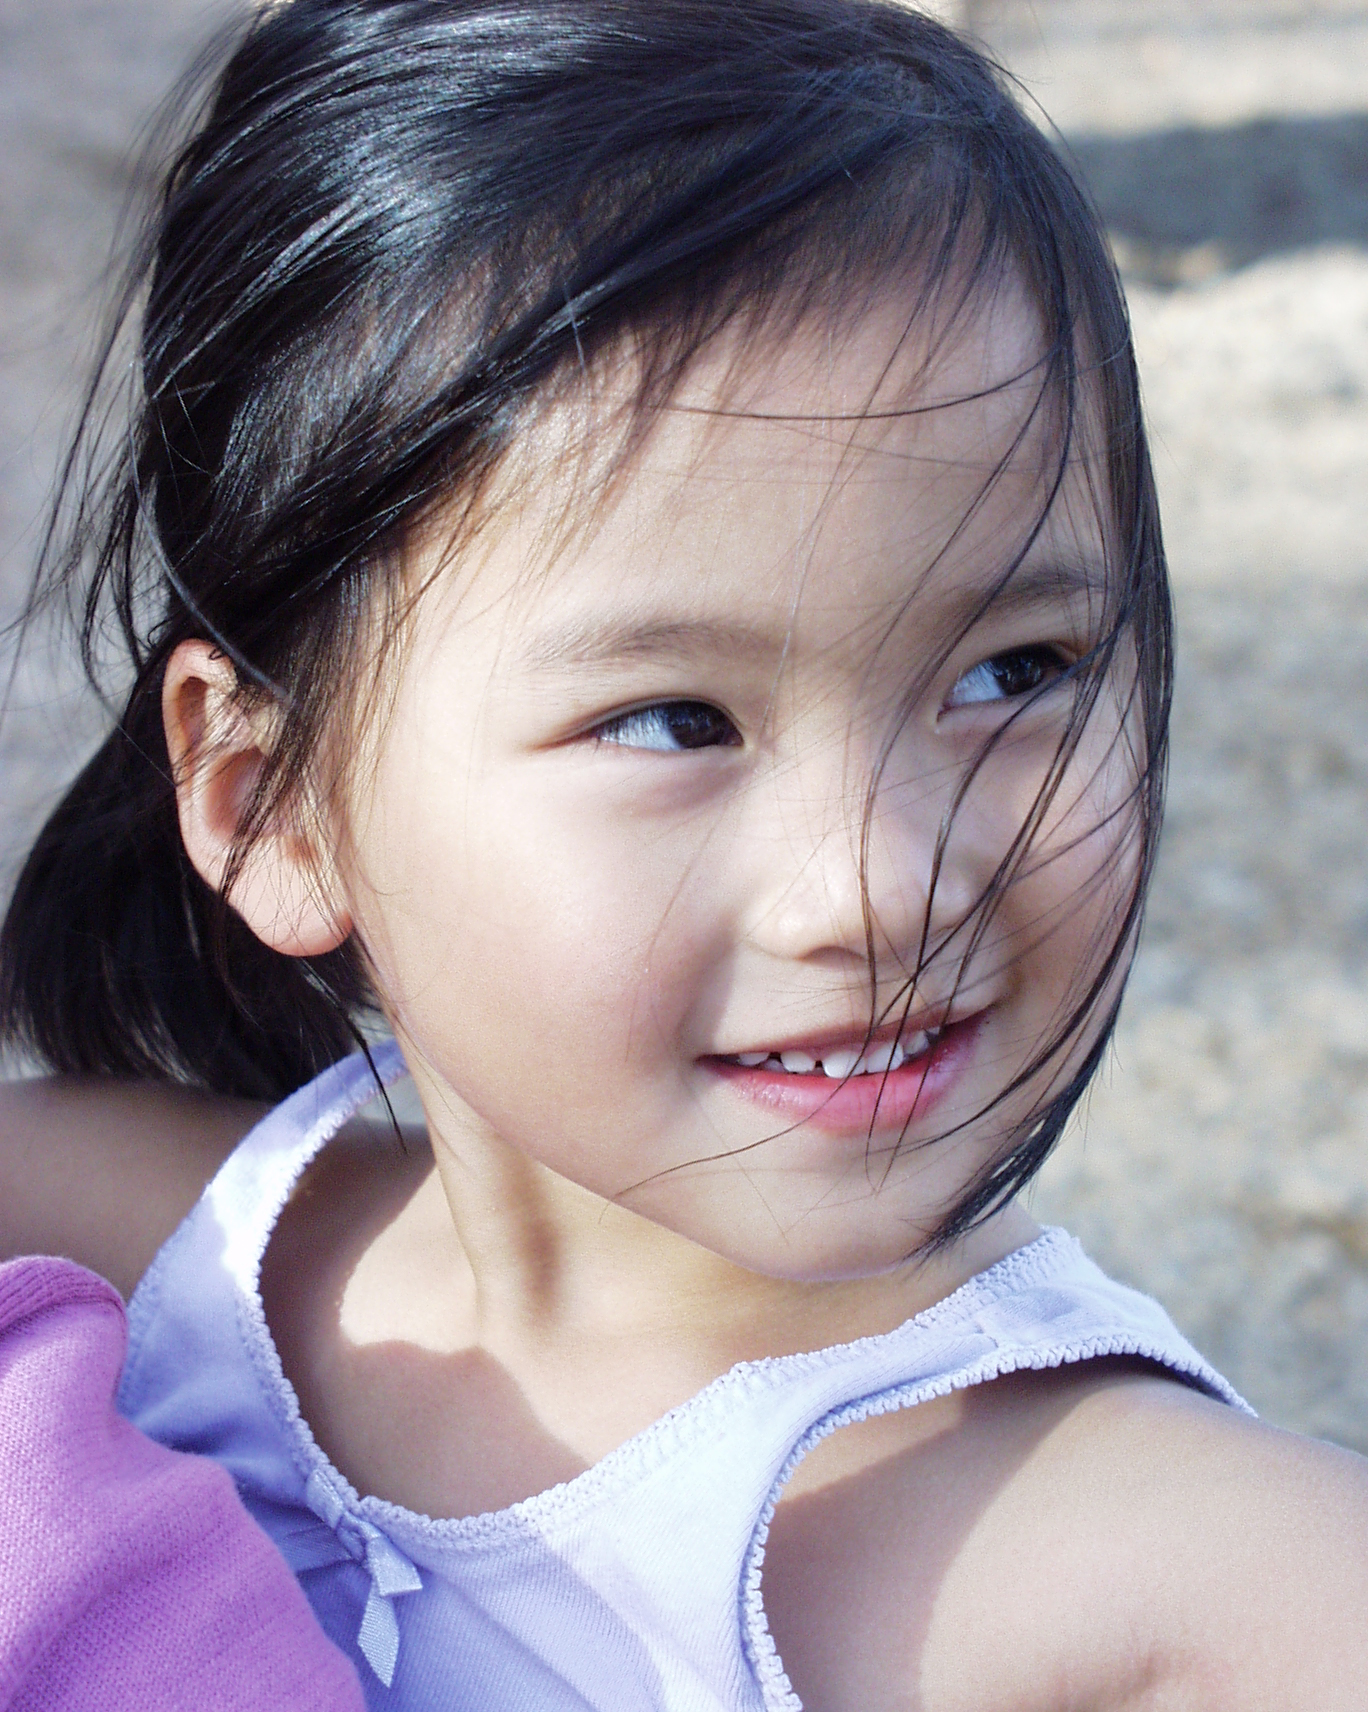 http://upload.wikimedia.org/wikipedia/commons/d/d9/Chinese_American_girl.jpg